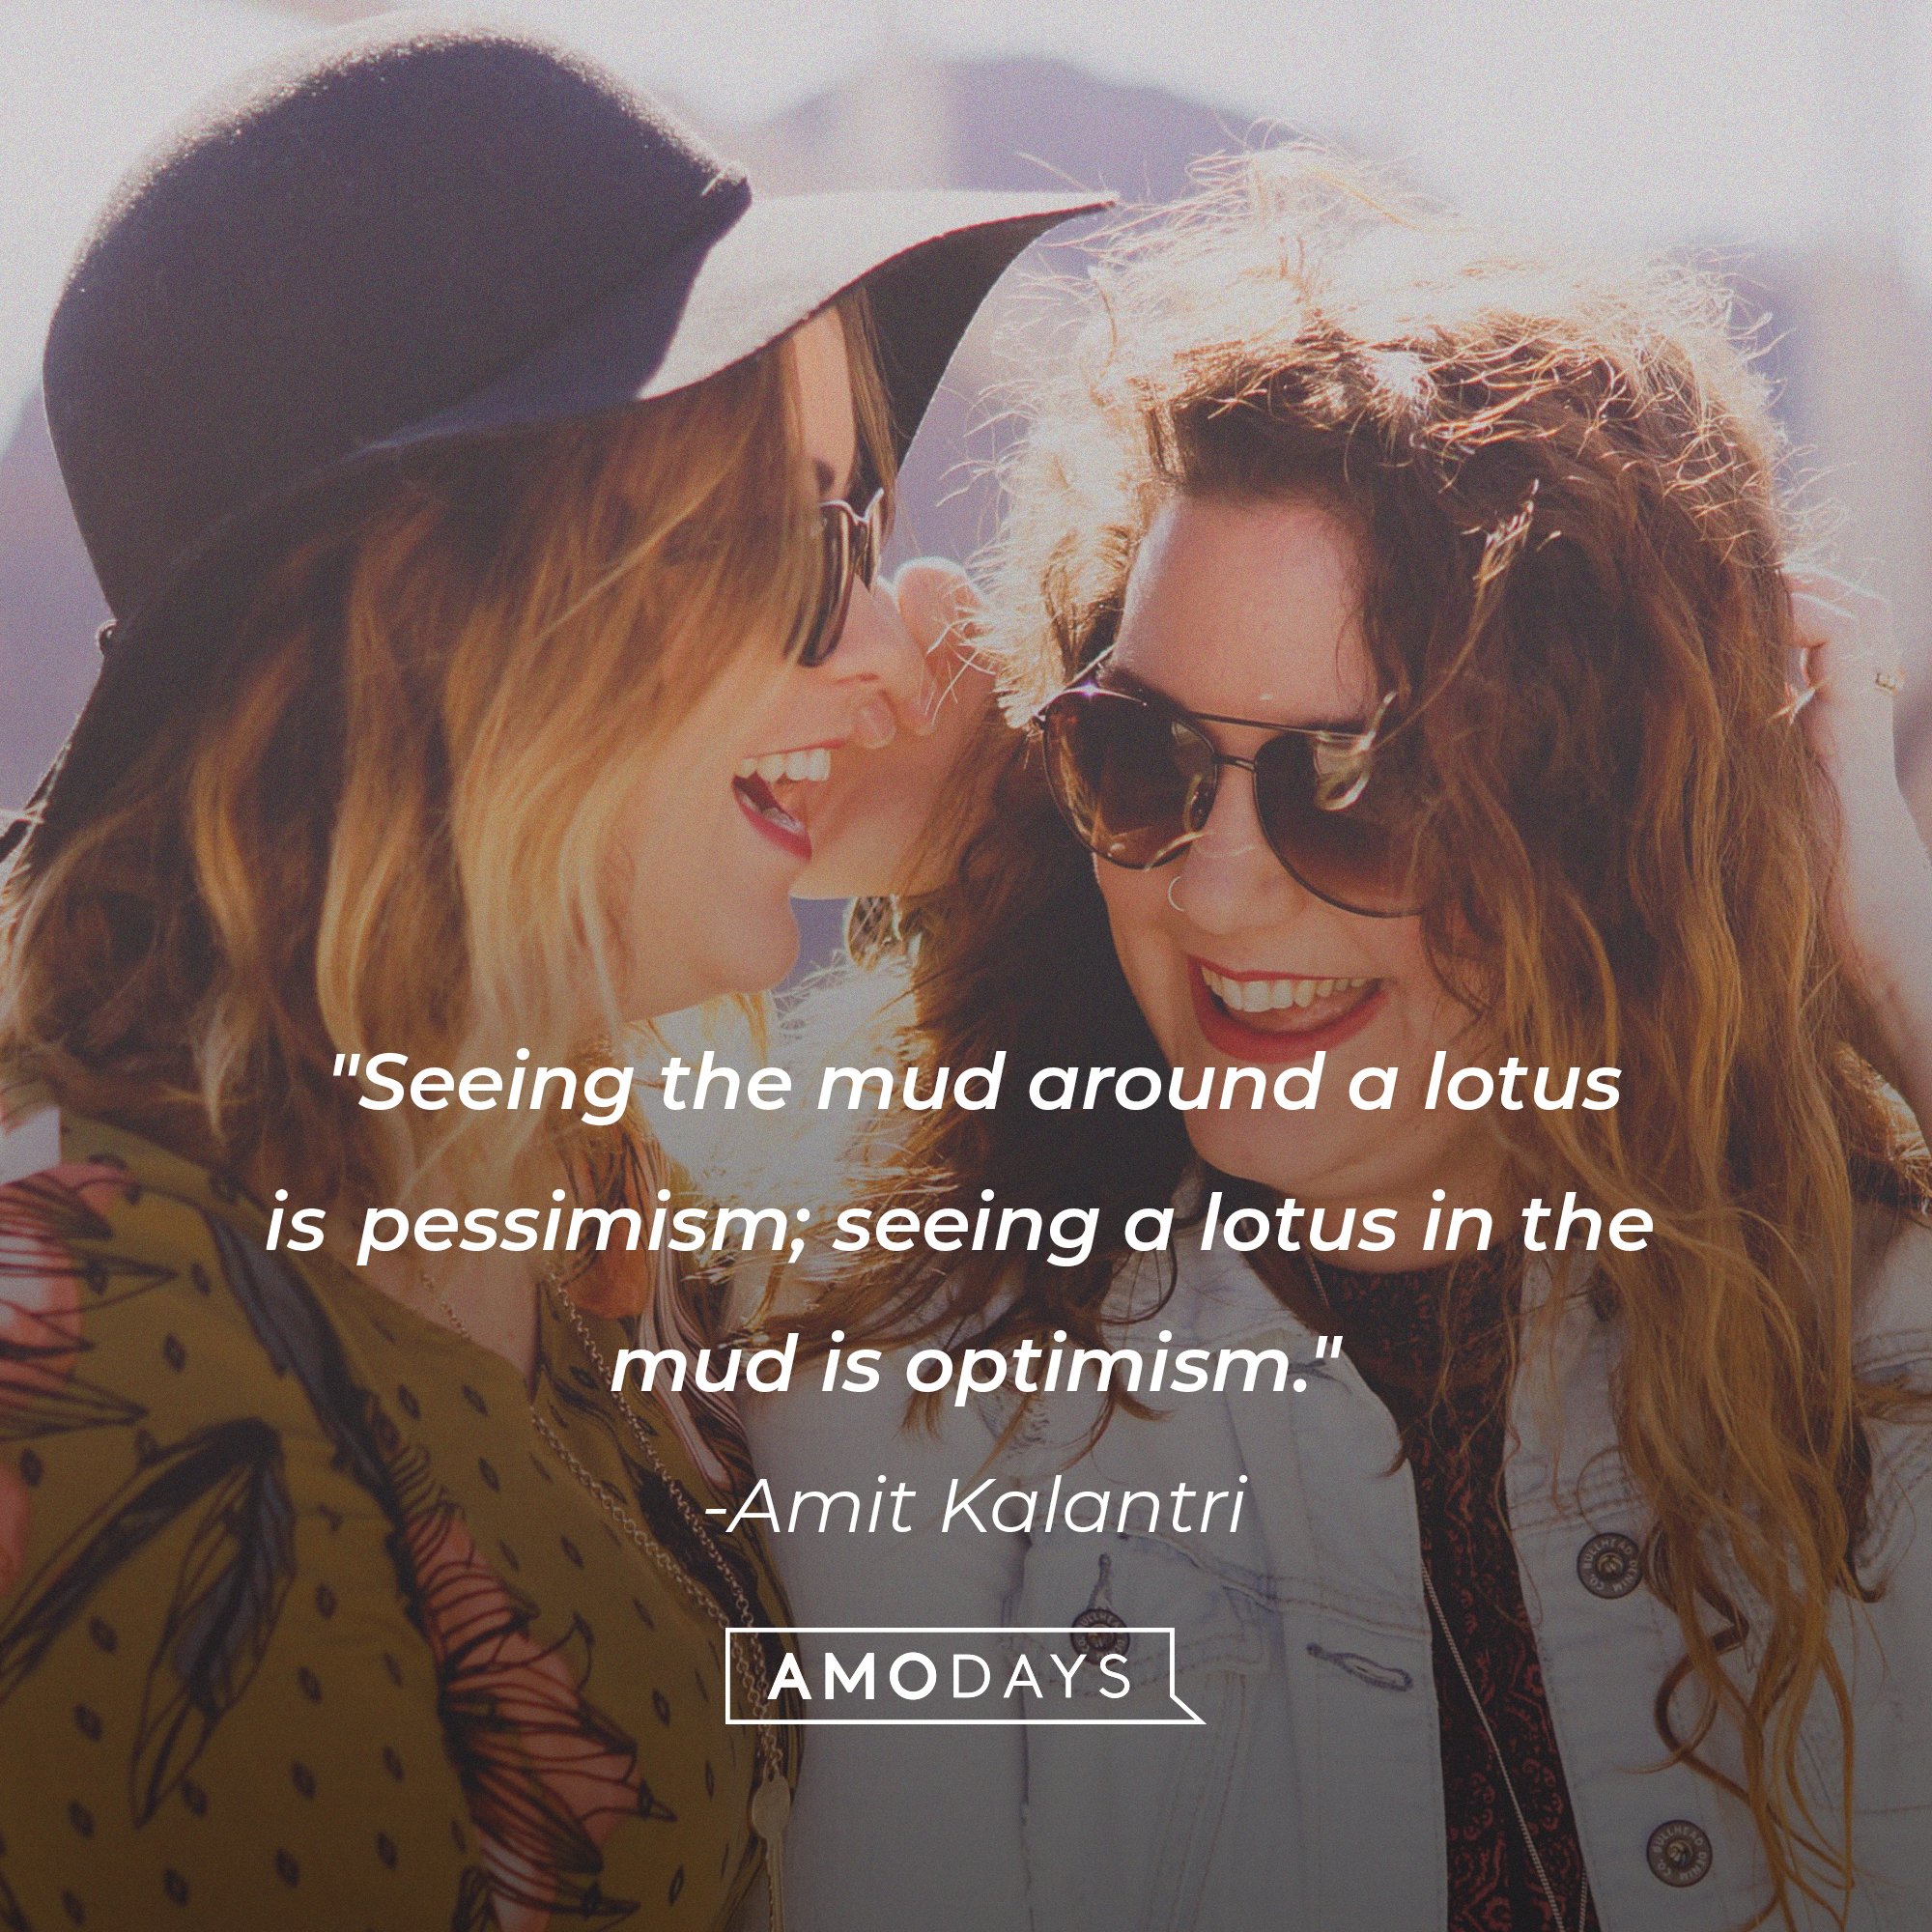 Amit Kalantri’s quote: "Seeing the mud around a lotus is pessimism; seeing a lotus in the mud is optimism." | Image: AmoDays